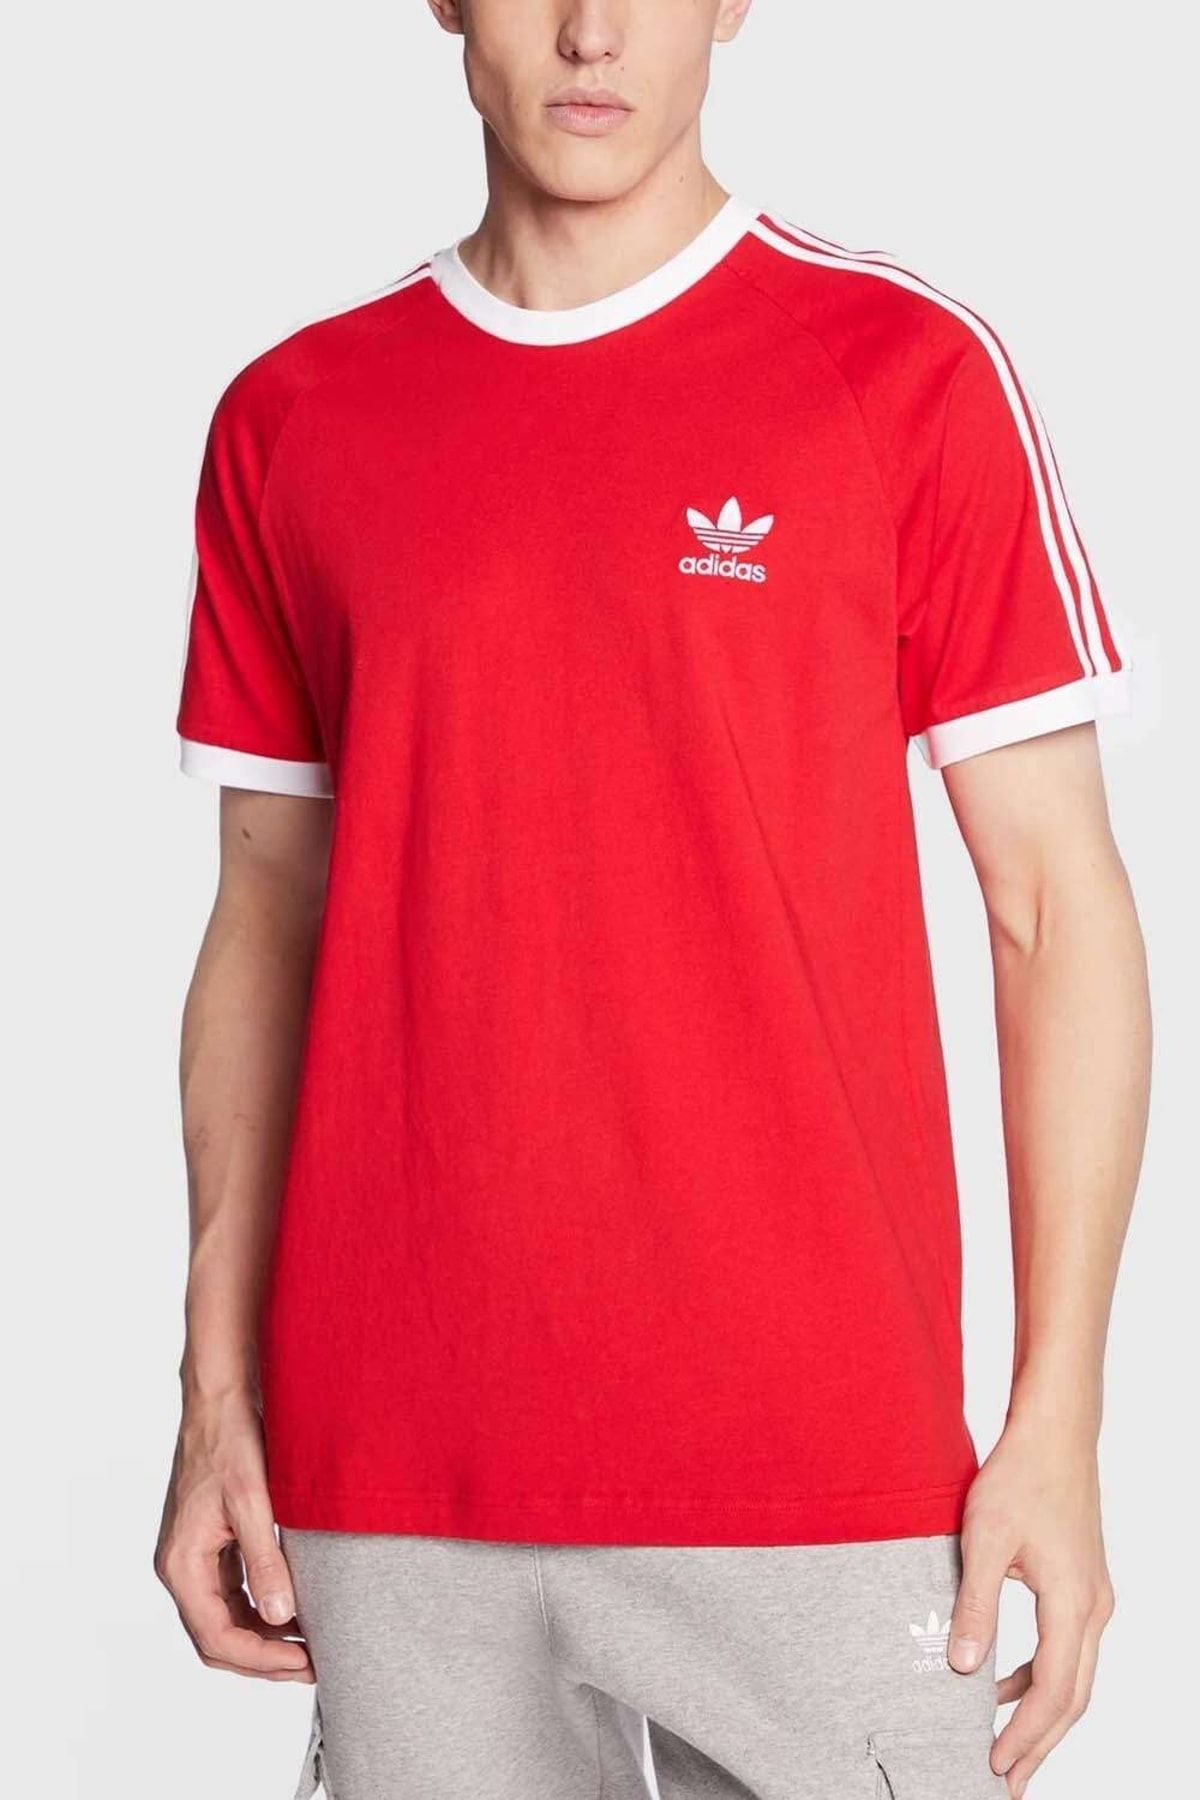 adidas Sports T-Shirt - Red - Regular fit - Trendyol